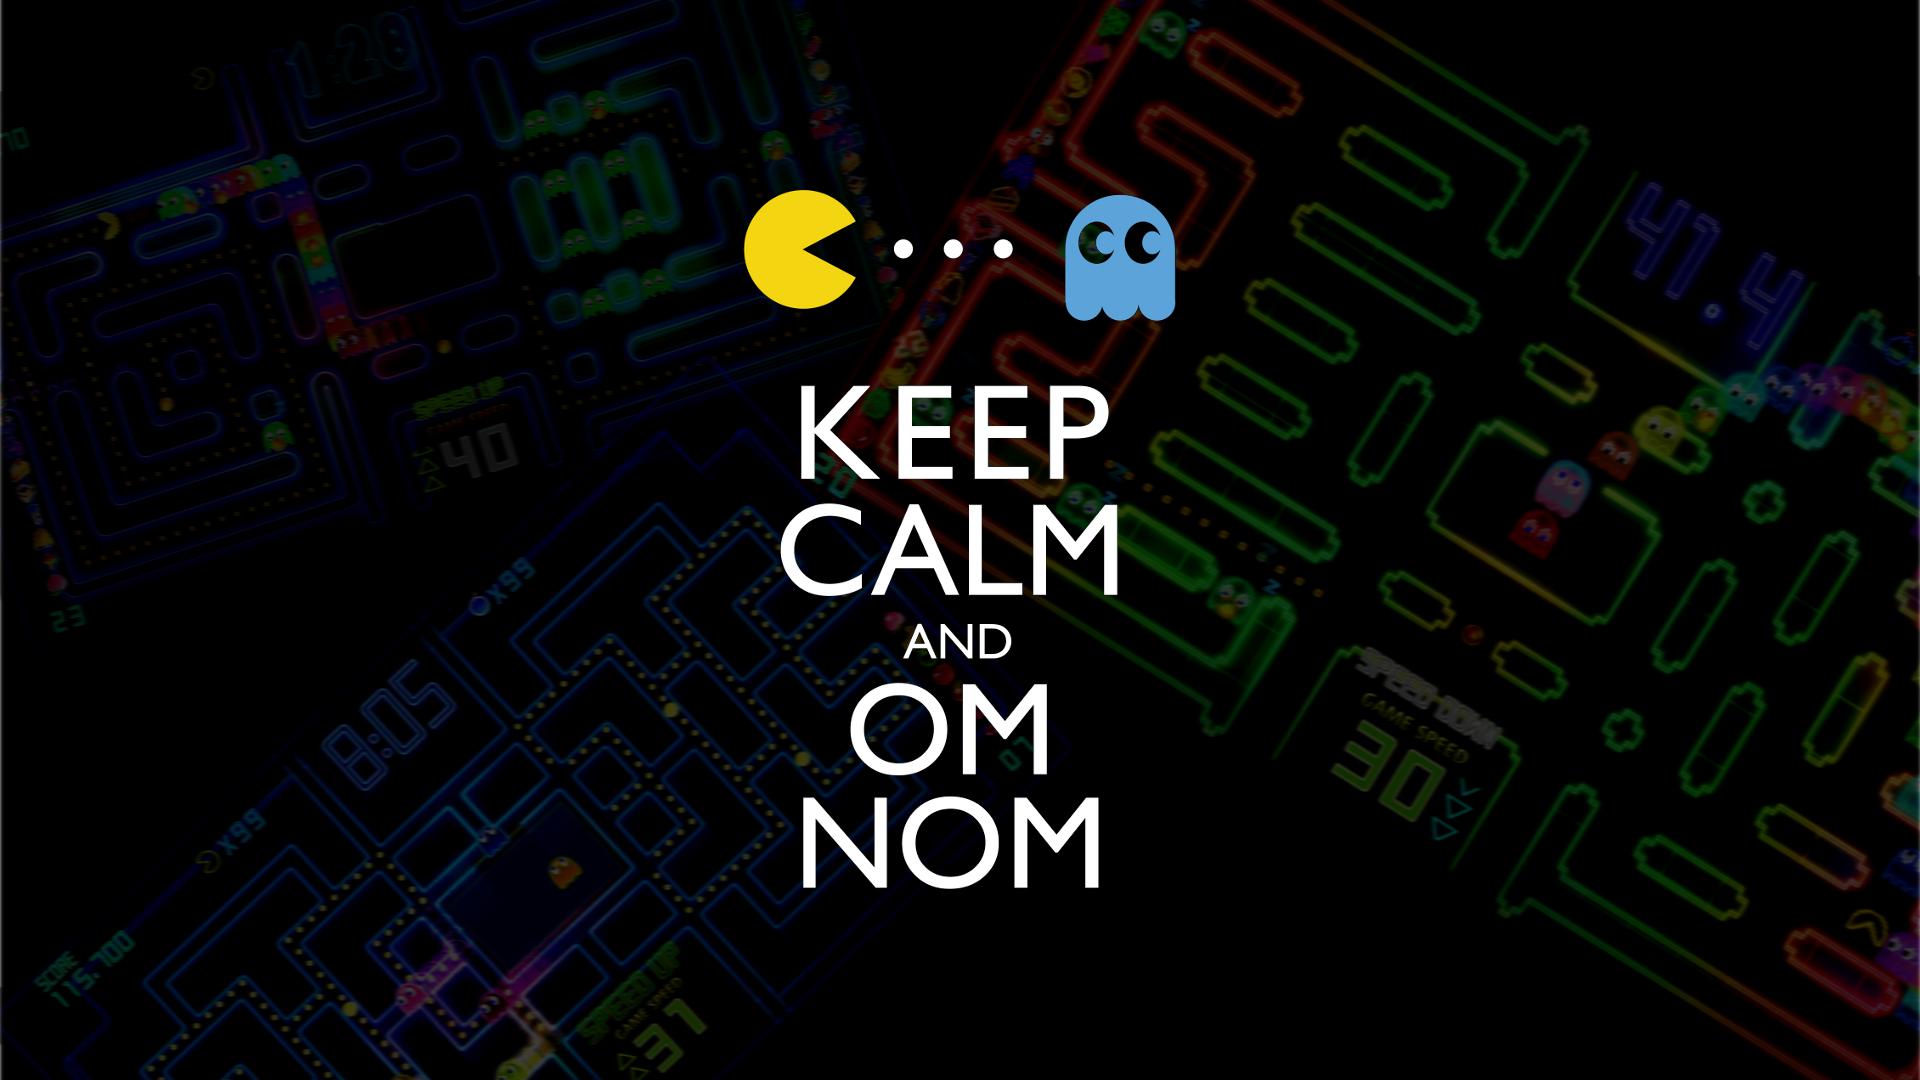 Pac Man Puter Wallpaper Desktop Background Id